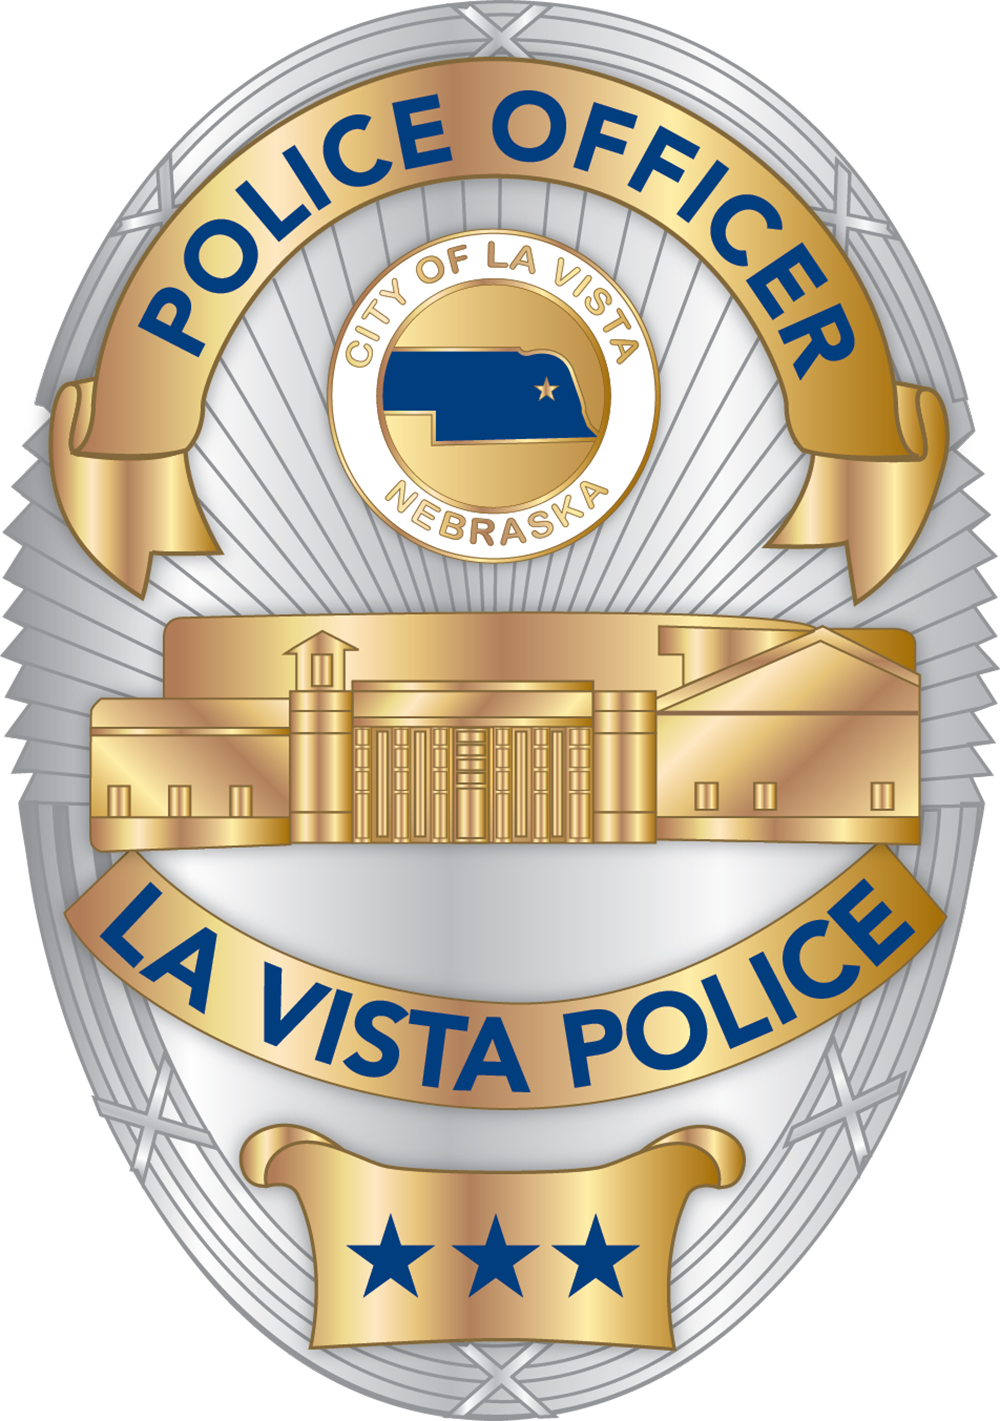 POLICE OFFICER badge